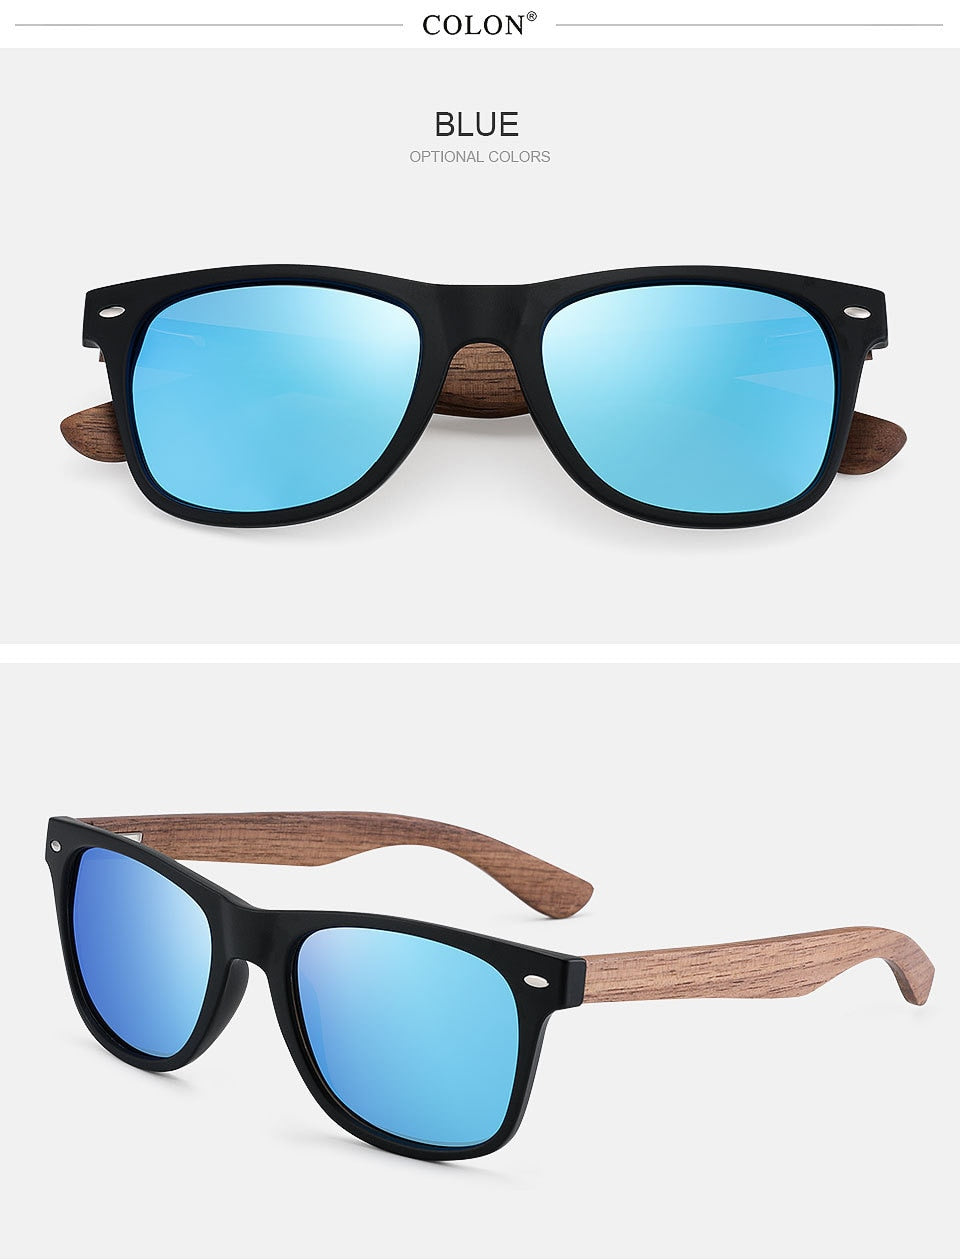 Yimaruili Men's Full Rim Wood Resin Frame HD Polarized Sunglasses 8004 Sunglasses Yimaruili Sunglasses   